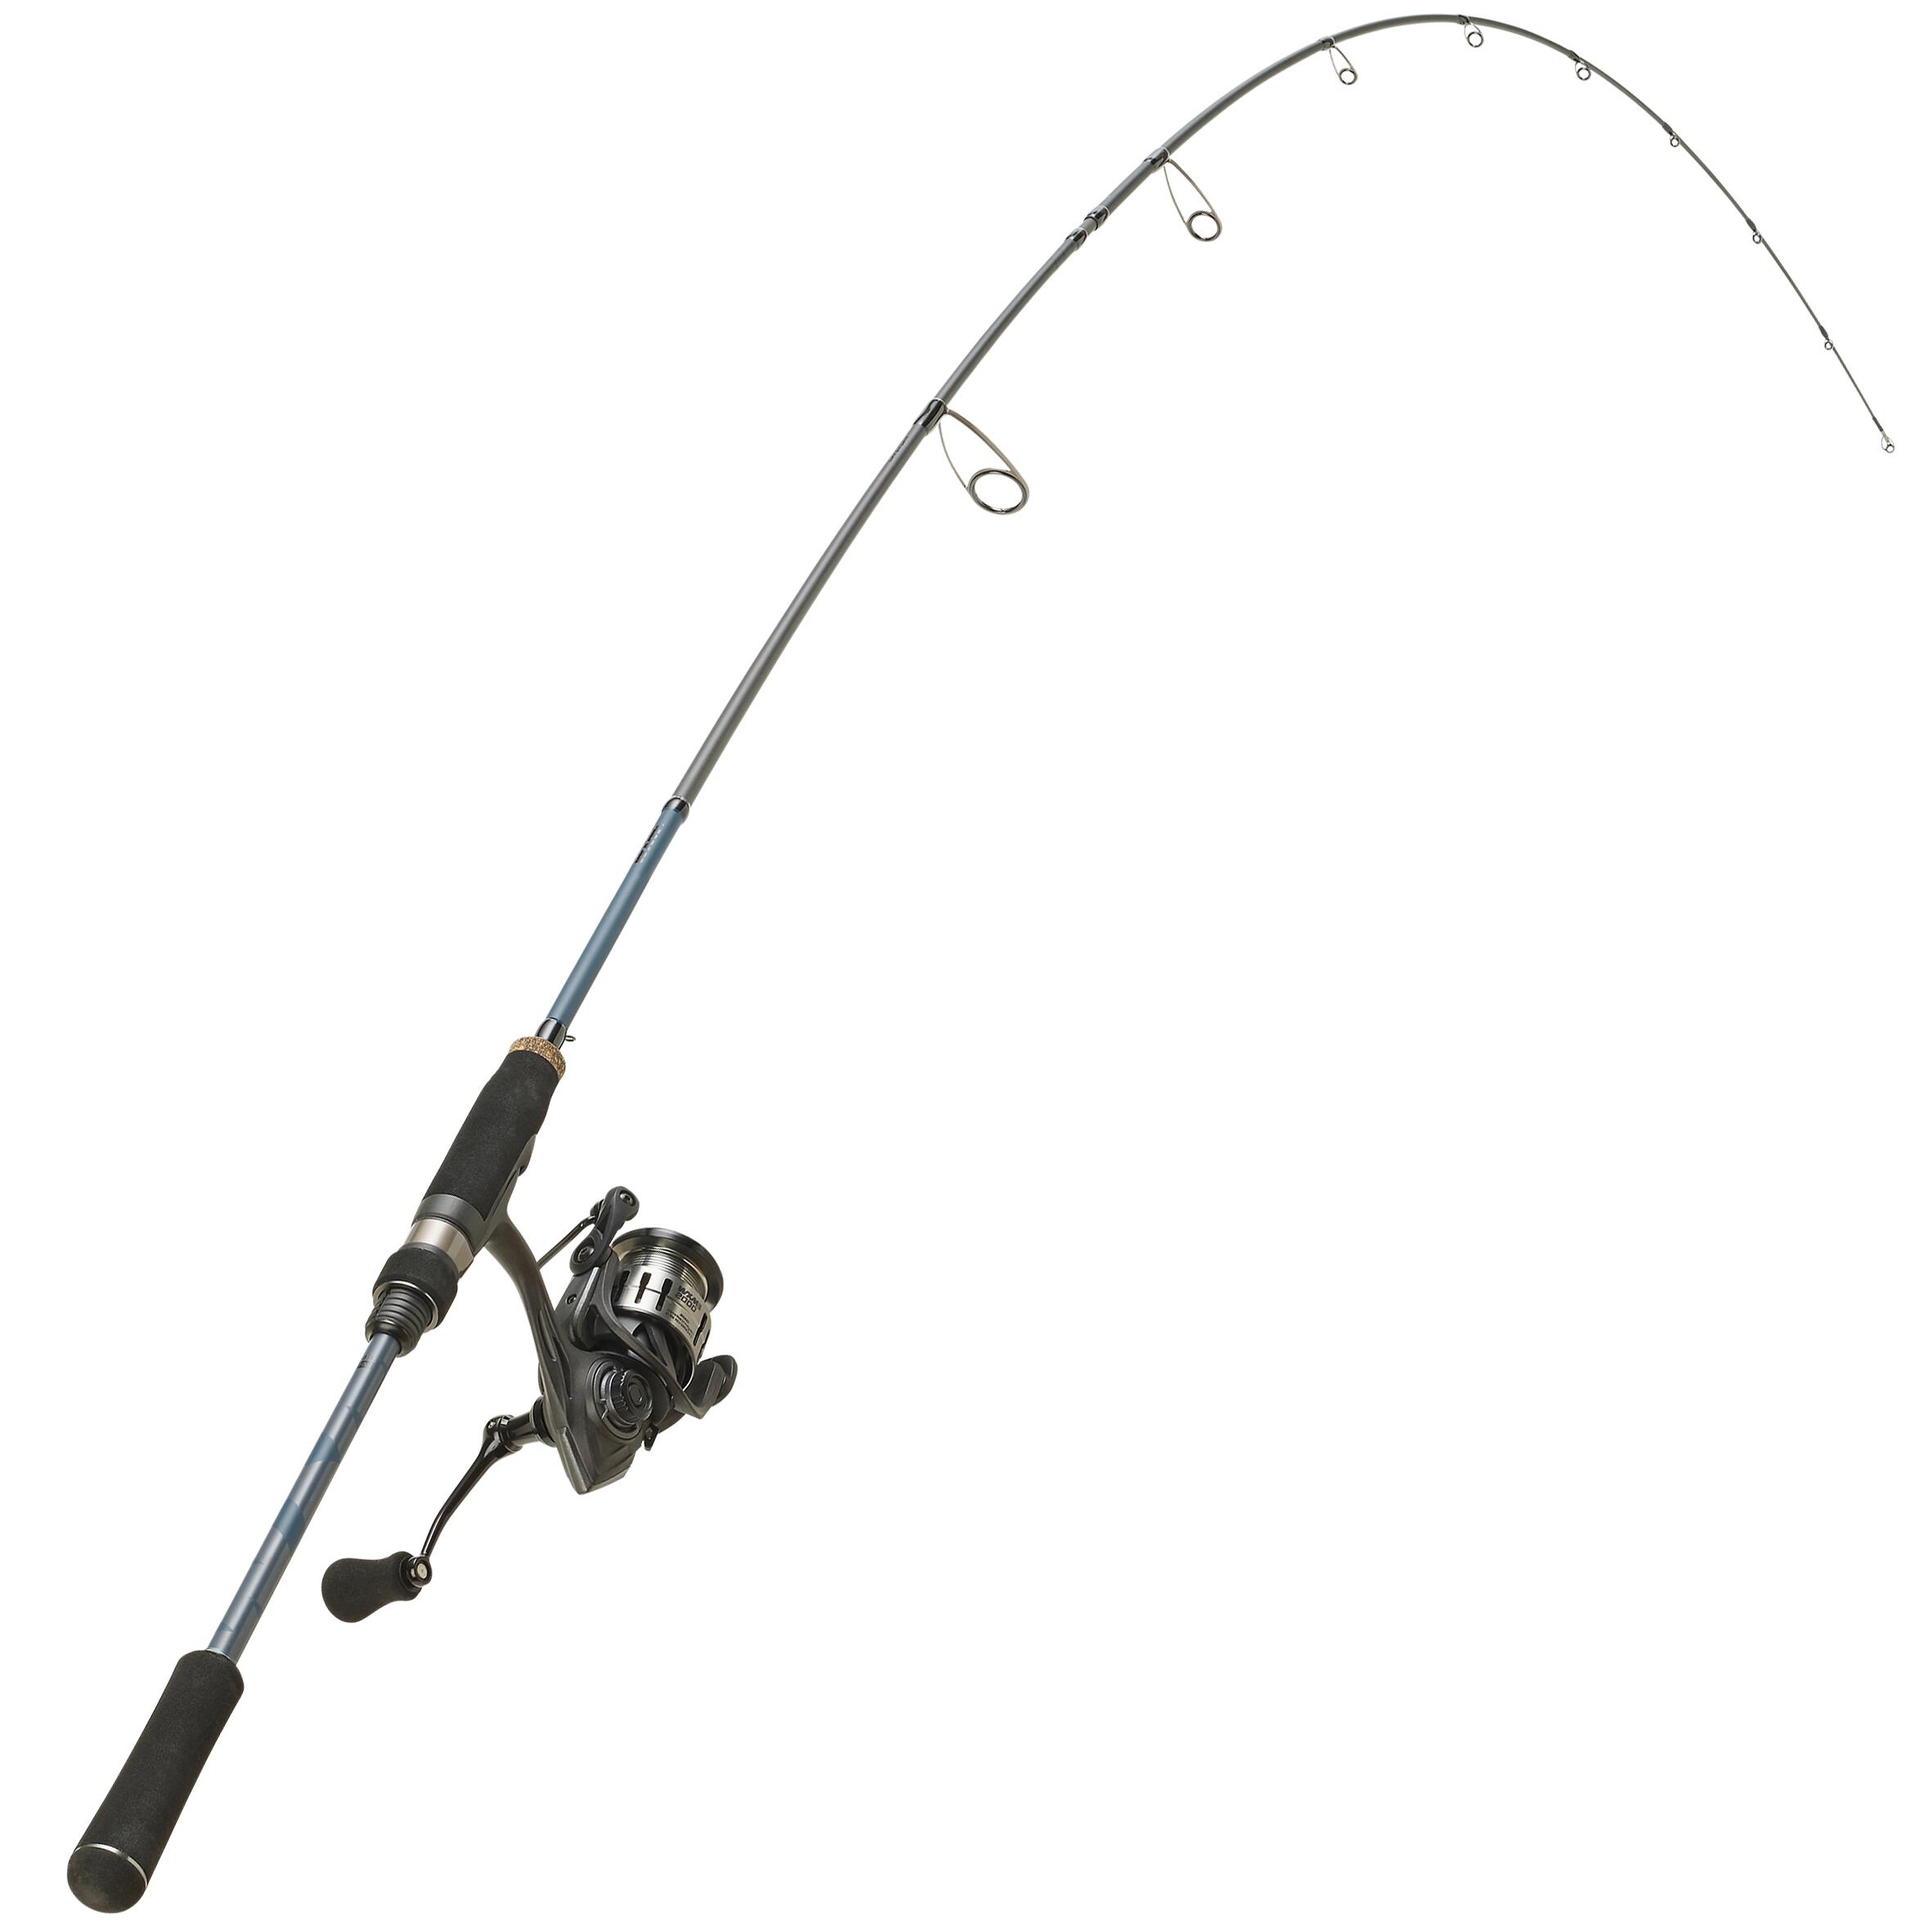 Okuma Fishing Rods & Reels - Hook, Line and Sinker - Guelph's #1